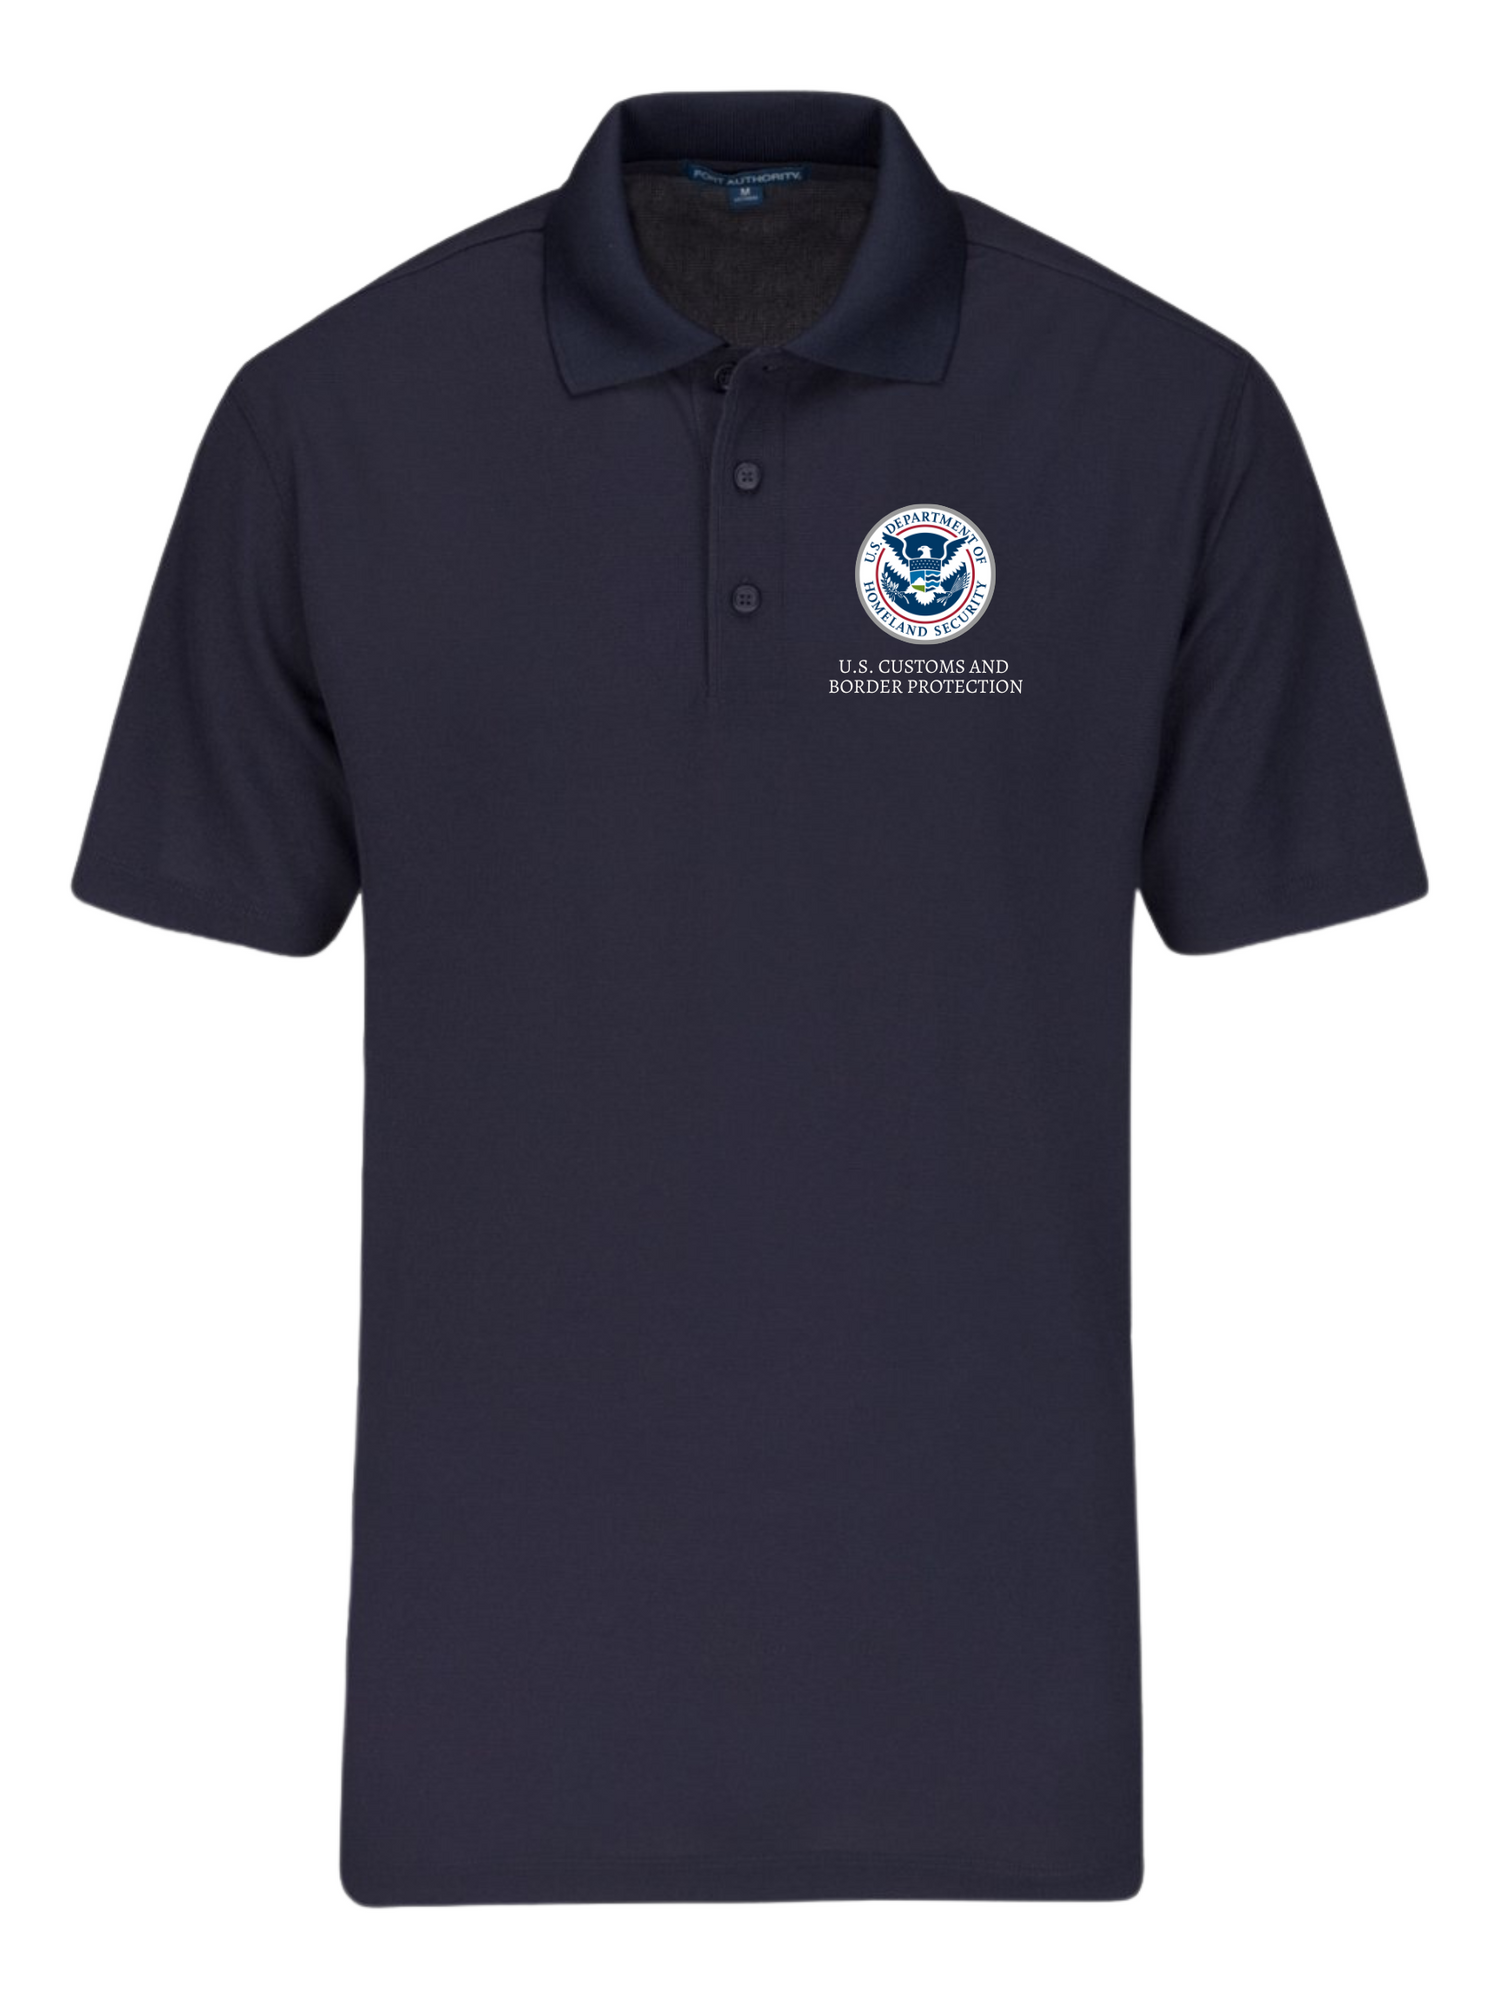 Dept of Homeland Security Employee Polo Shirt – FEDS Apparel